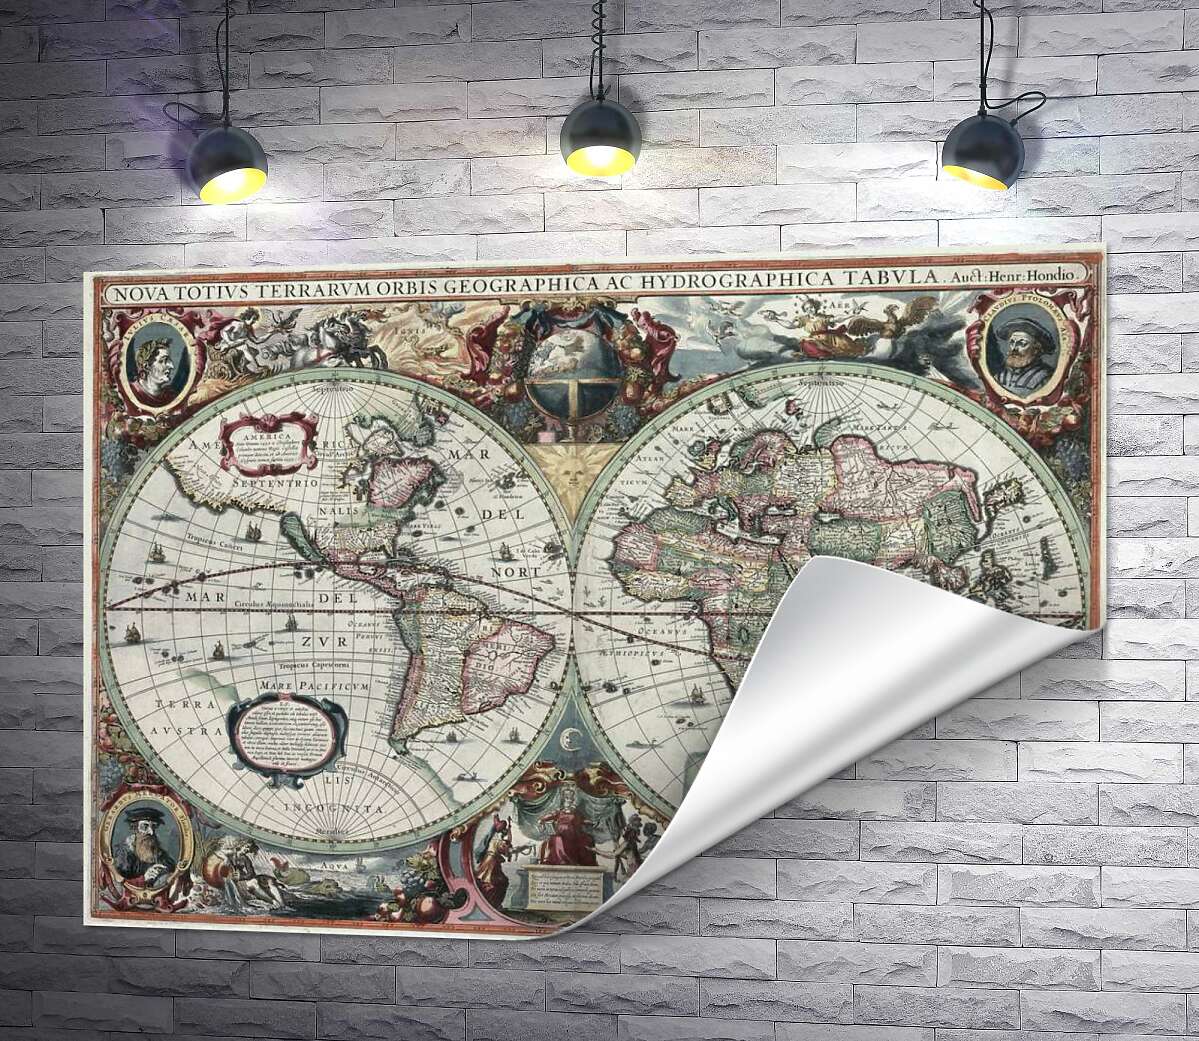 друк Карта світу 1630 року, авторства Гендріка Гондіуса (Hendrik Hondius)